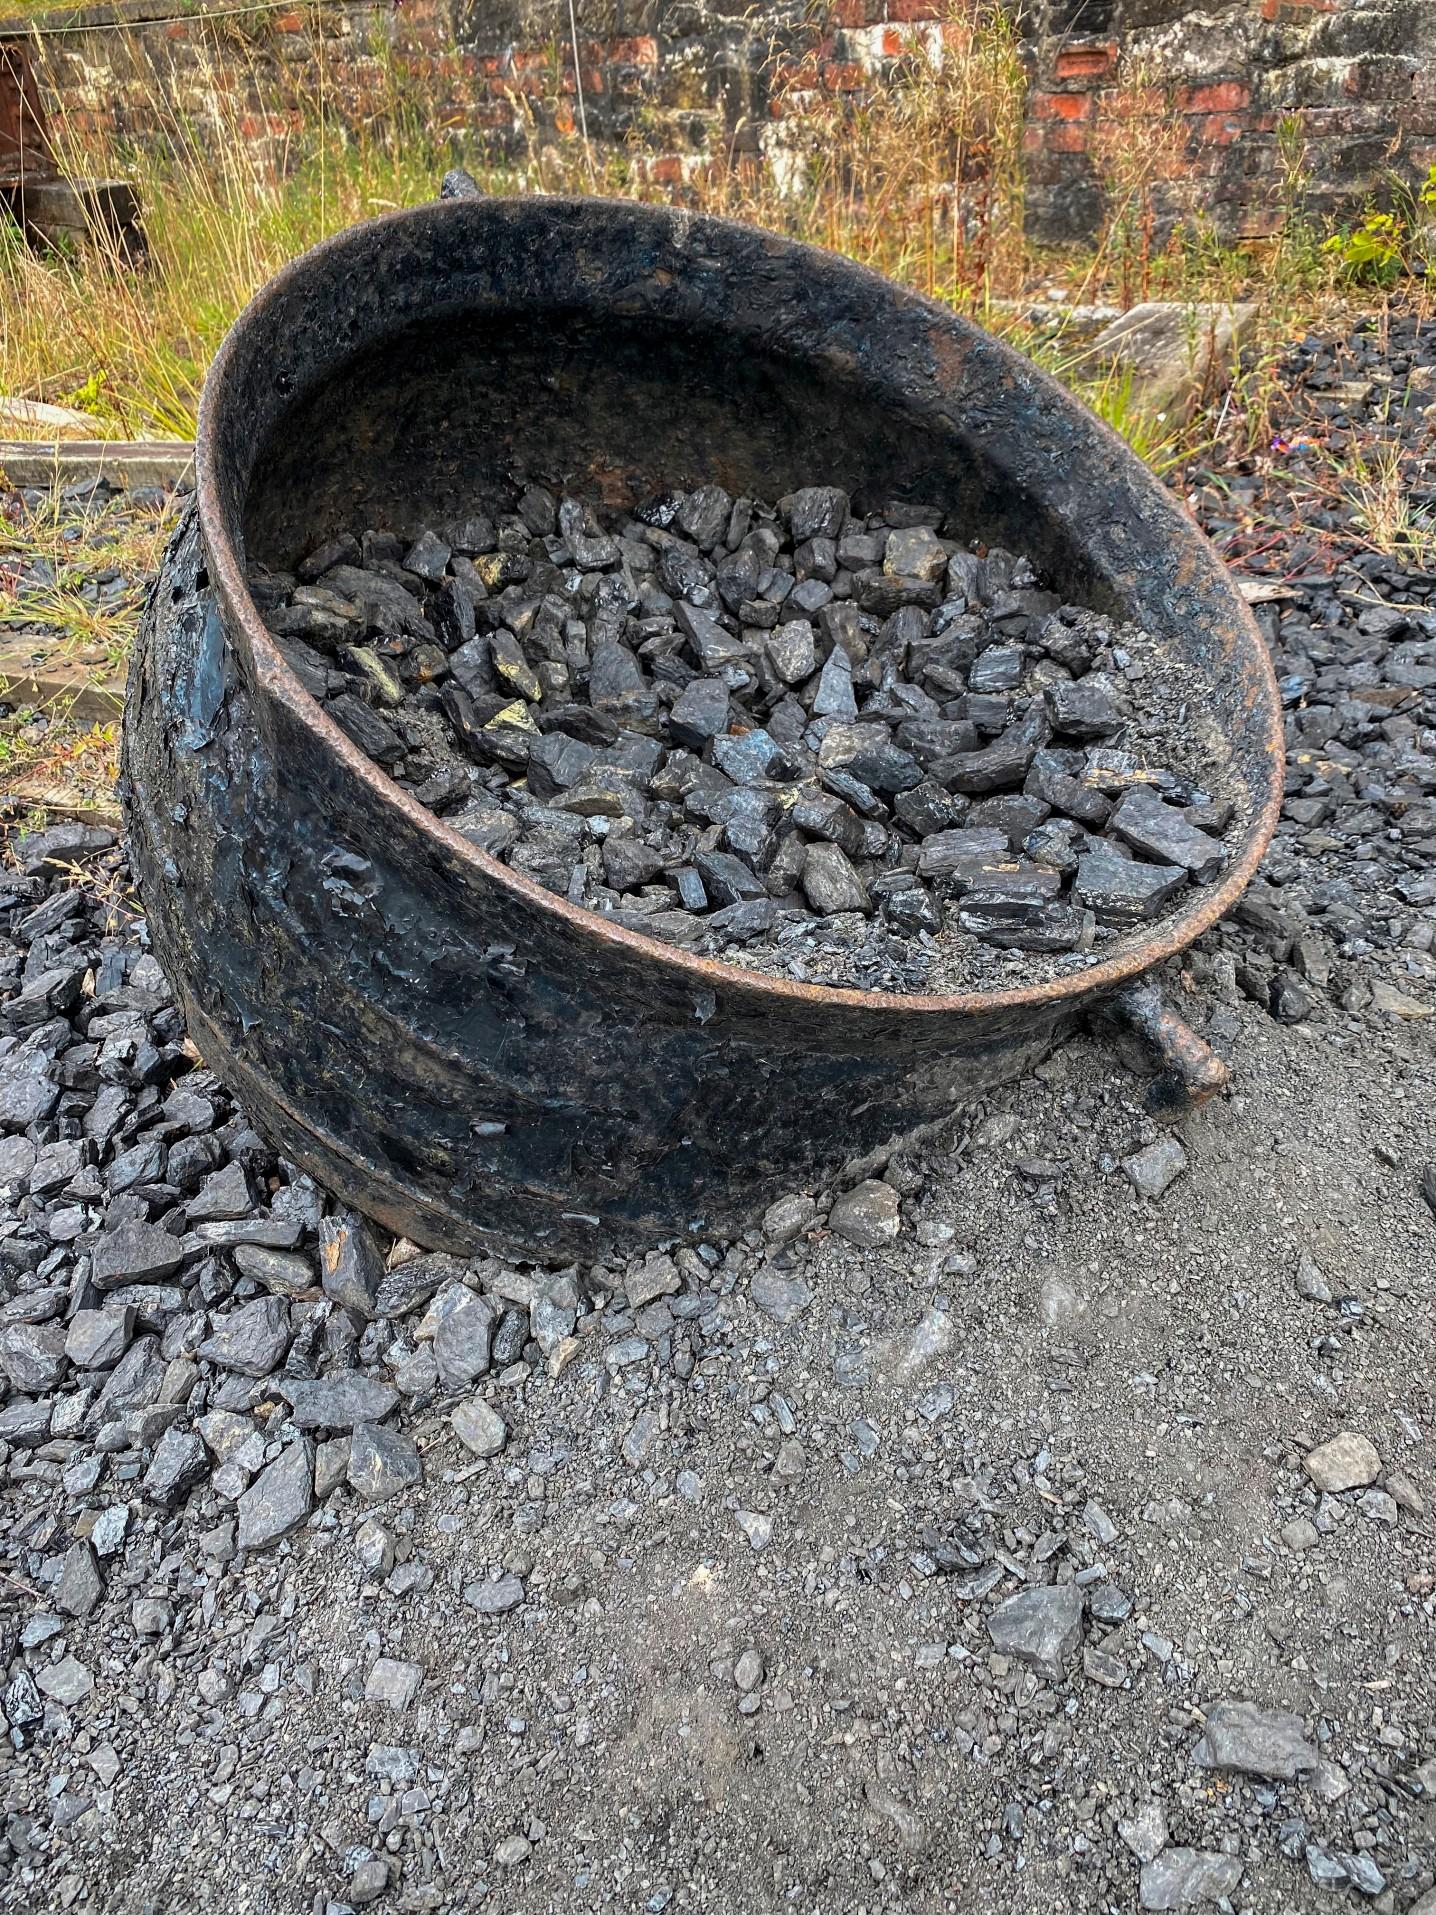 Old coal mining equipment full of coal